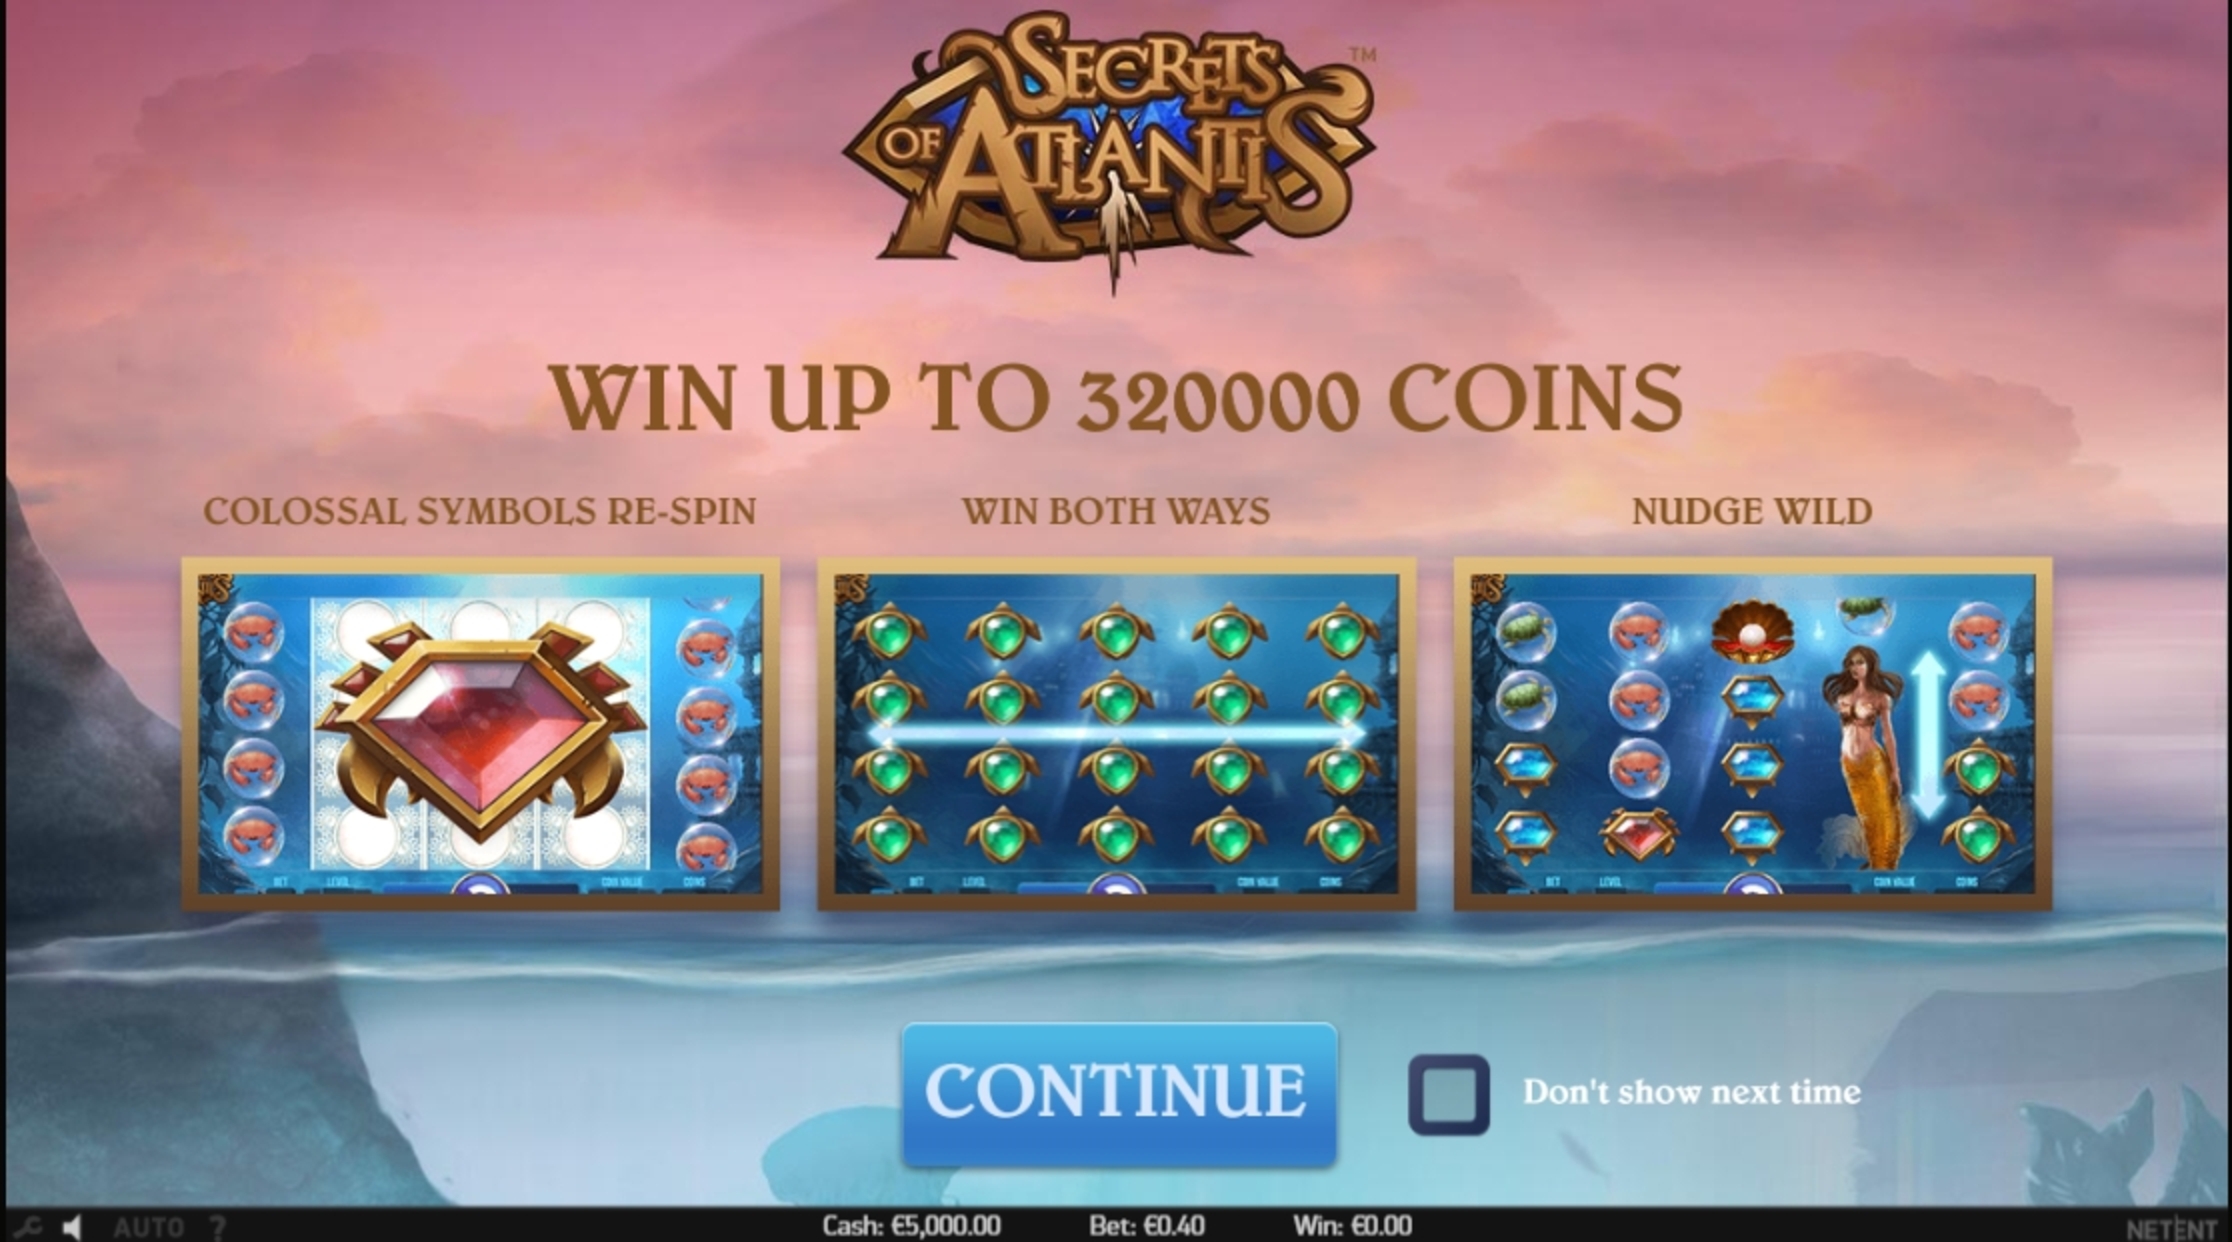 Play Secrets of Atlantis Free Casino Slot Game by NetEnt